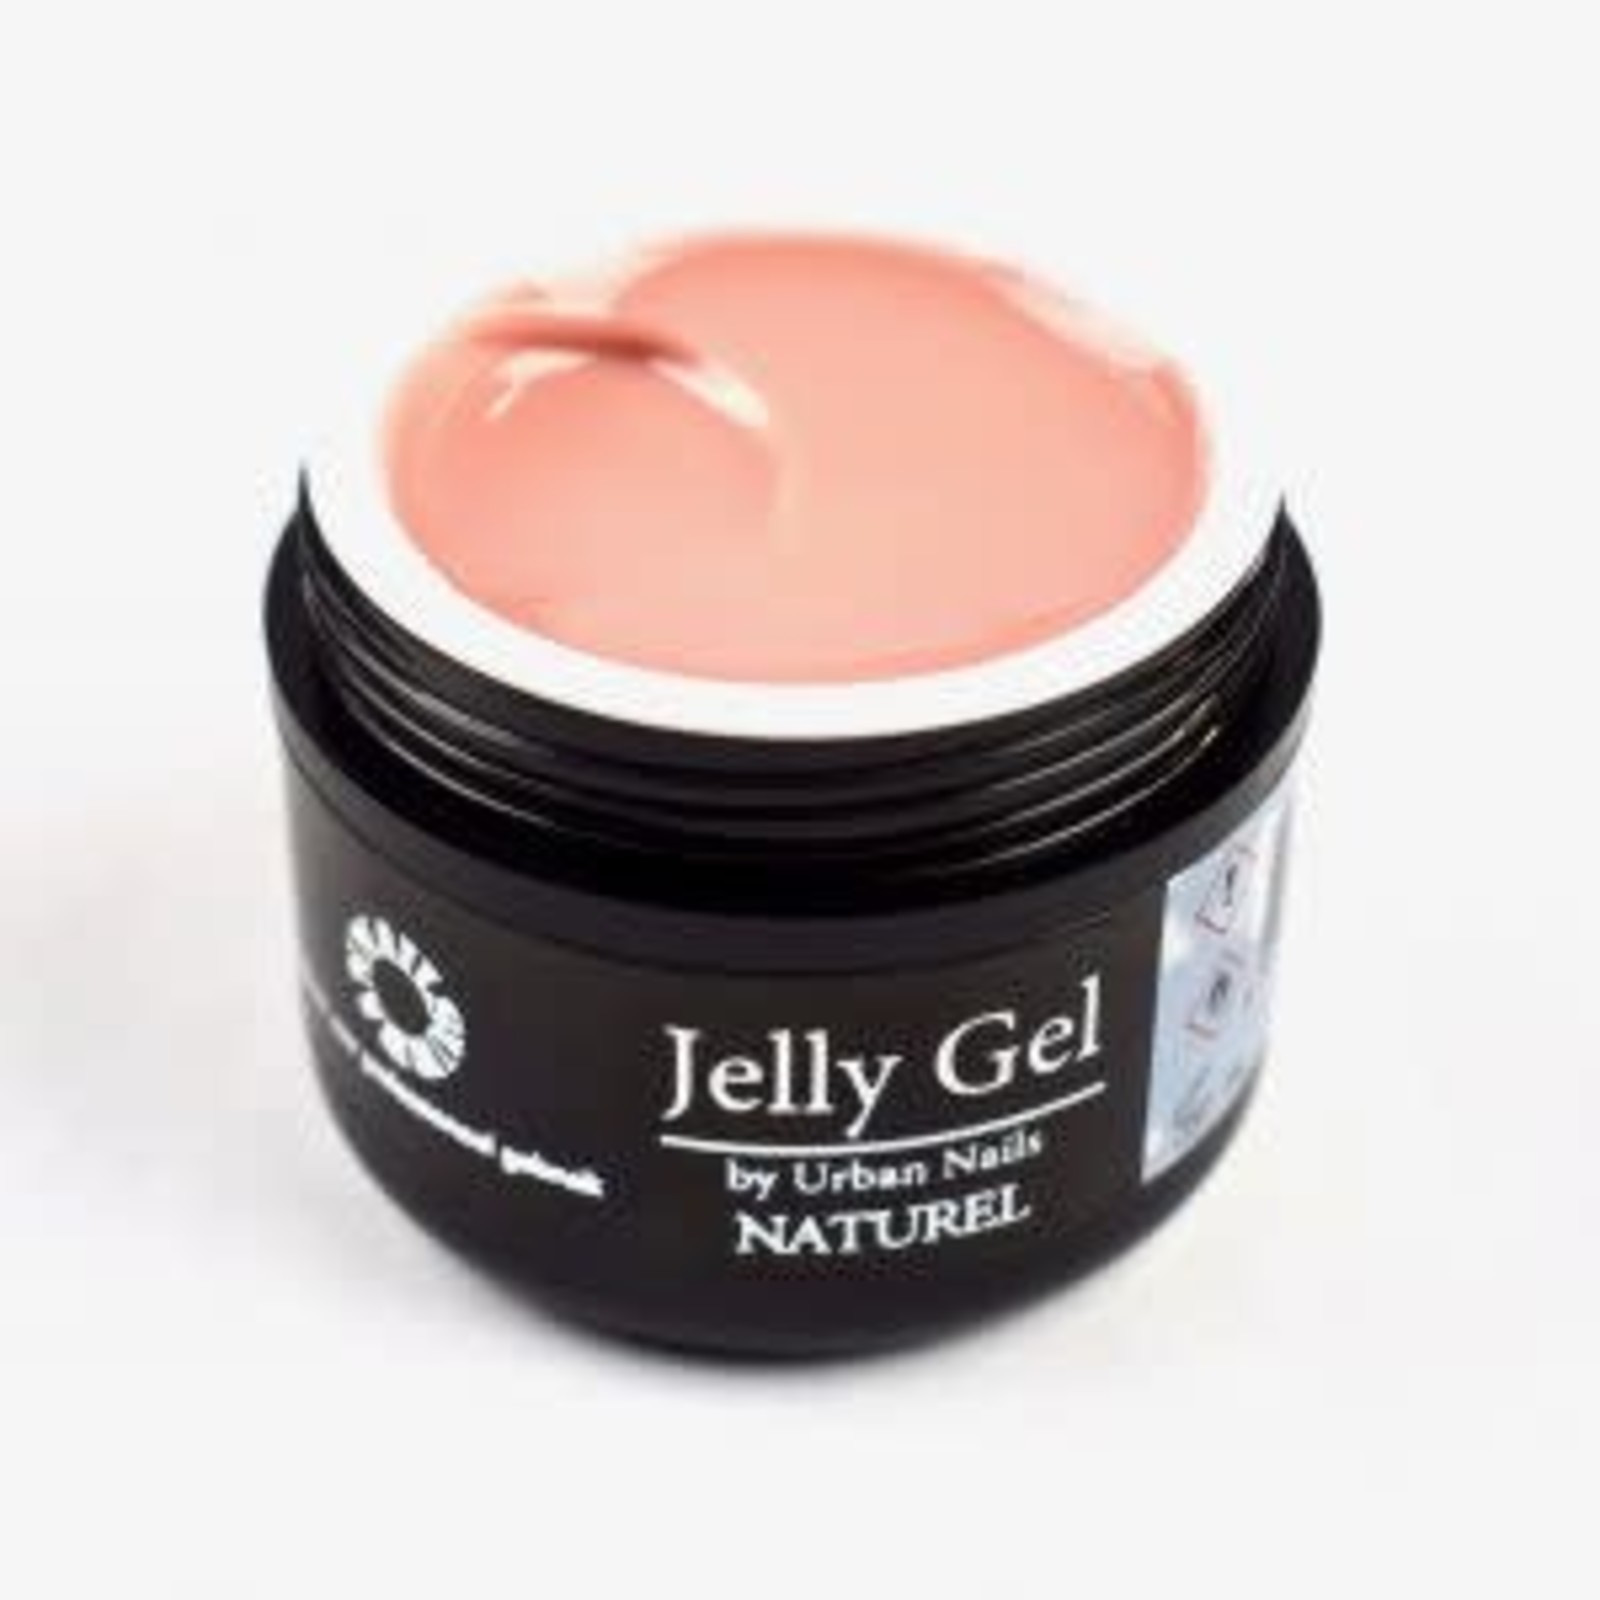 Urban nails Jelly gel naturel 15 gr